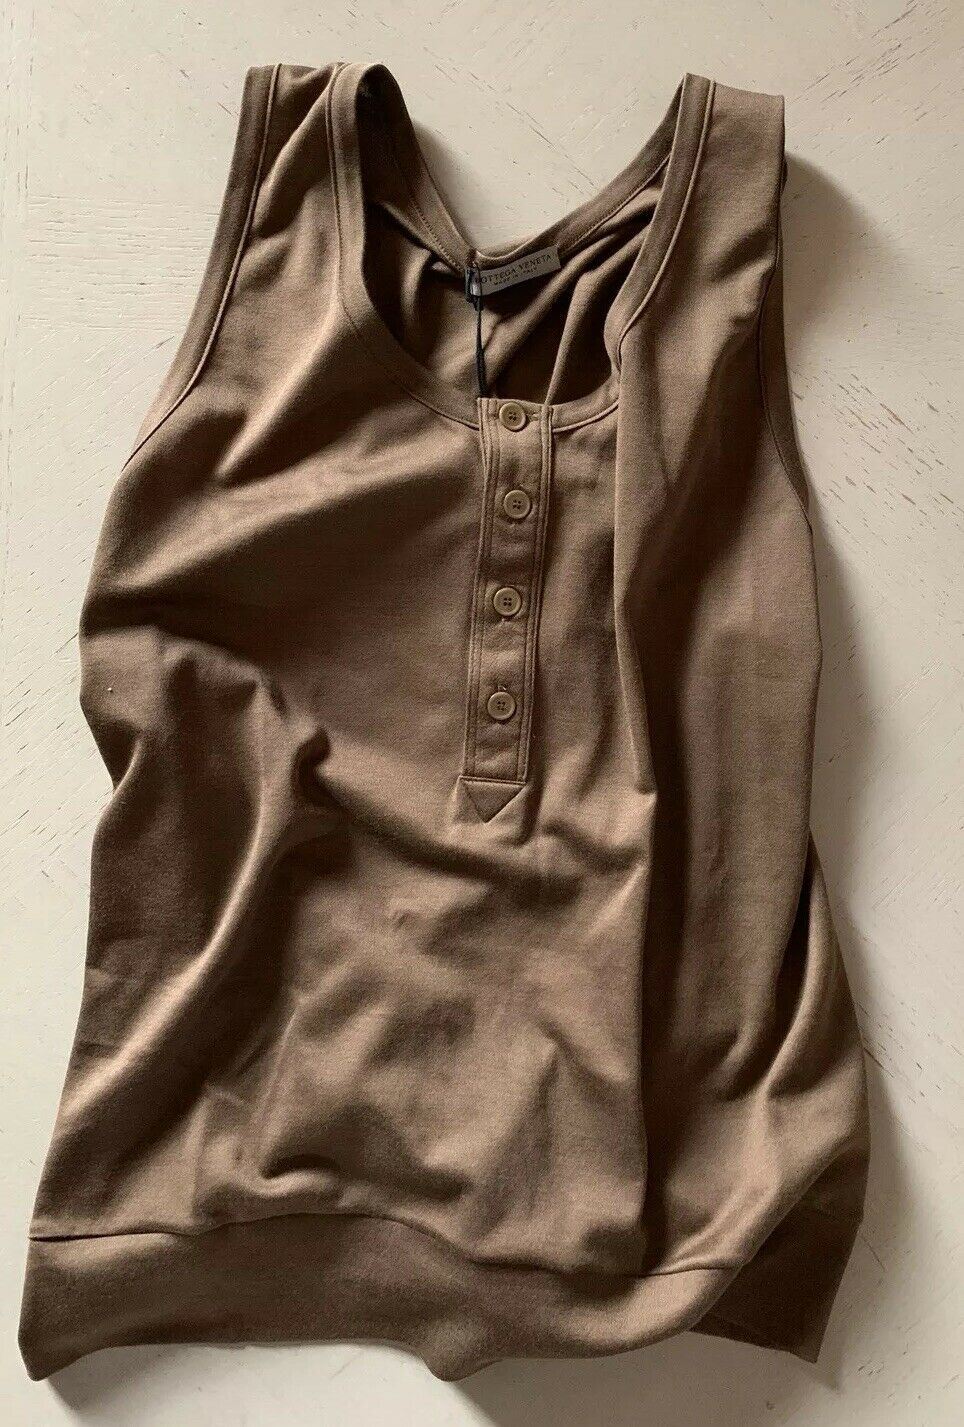 New $350 Bottega Veneta Men Silk/Cotton Tank Top T Shirt Camel S US ( 48 Eu )